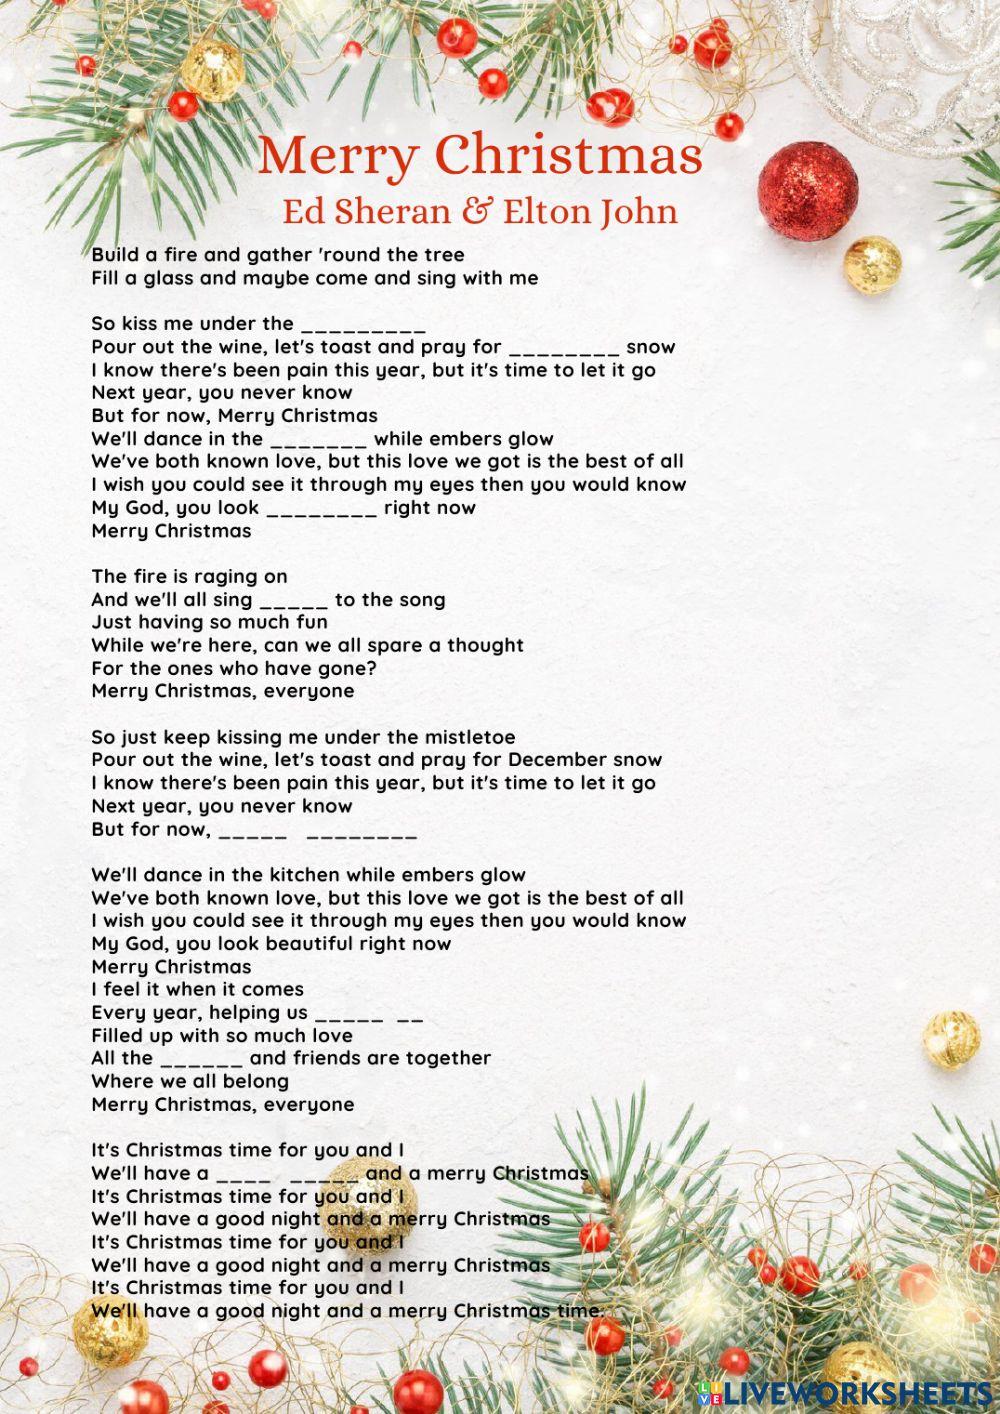 Merry Christmas Ed Sheran & Elton John